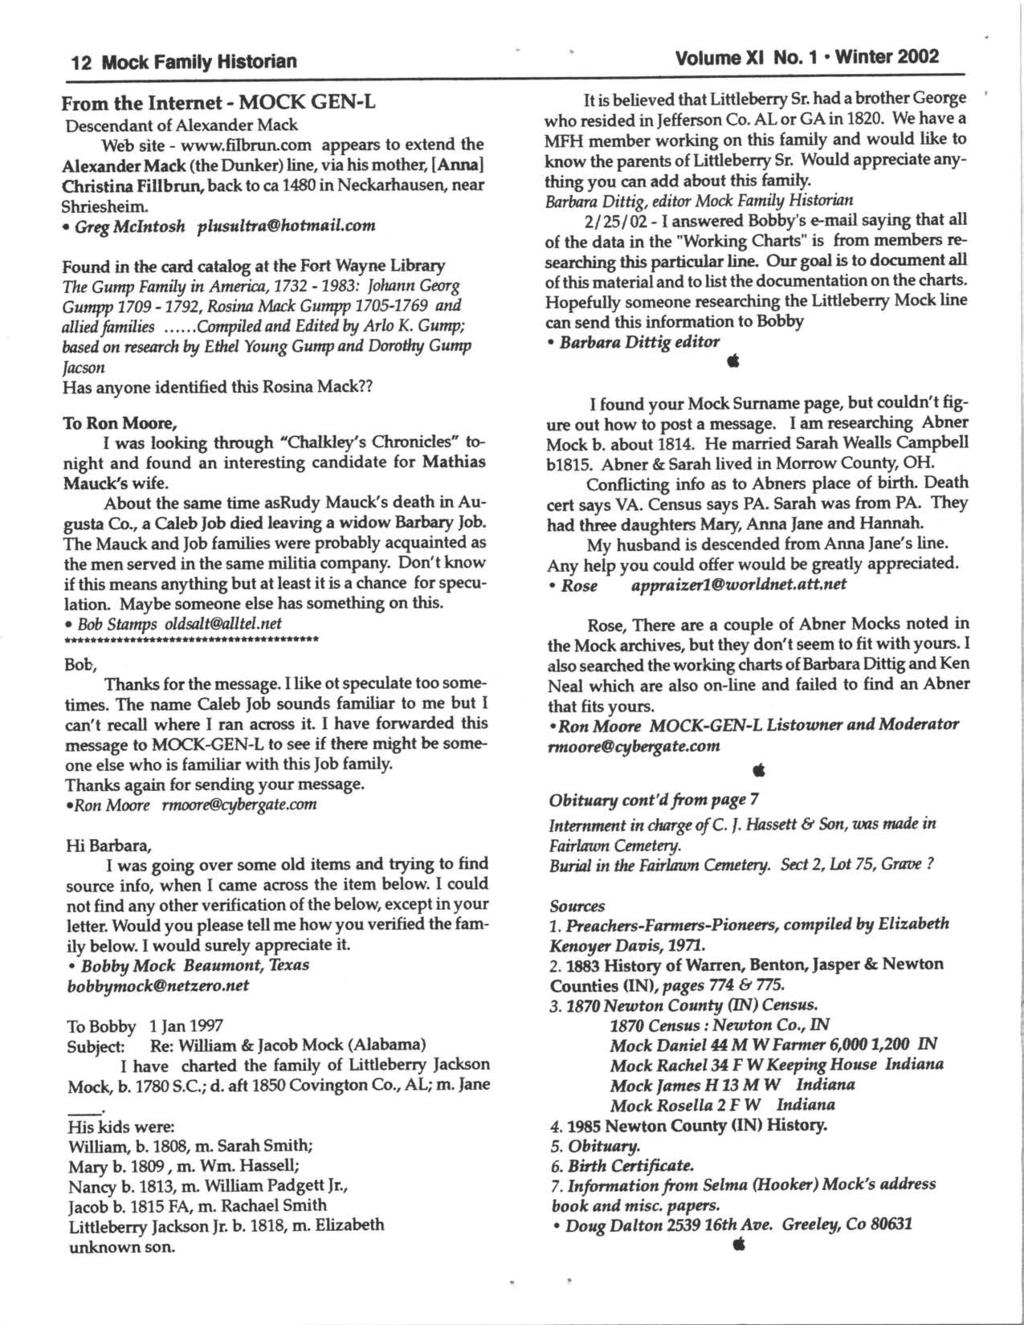 12 llock Fmlly Historin Volume Xl No. 1 'Winter 2fi12 From the Internet - MOCK GEN-L Descendnt of Alexnder Mck Web site - www.